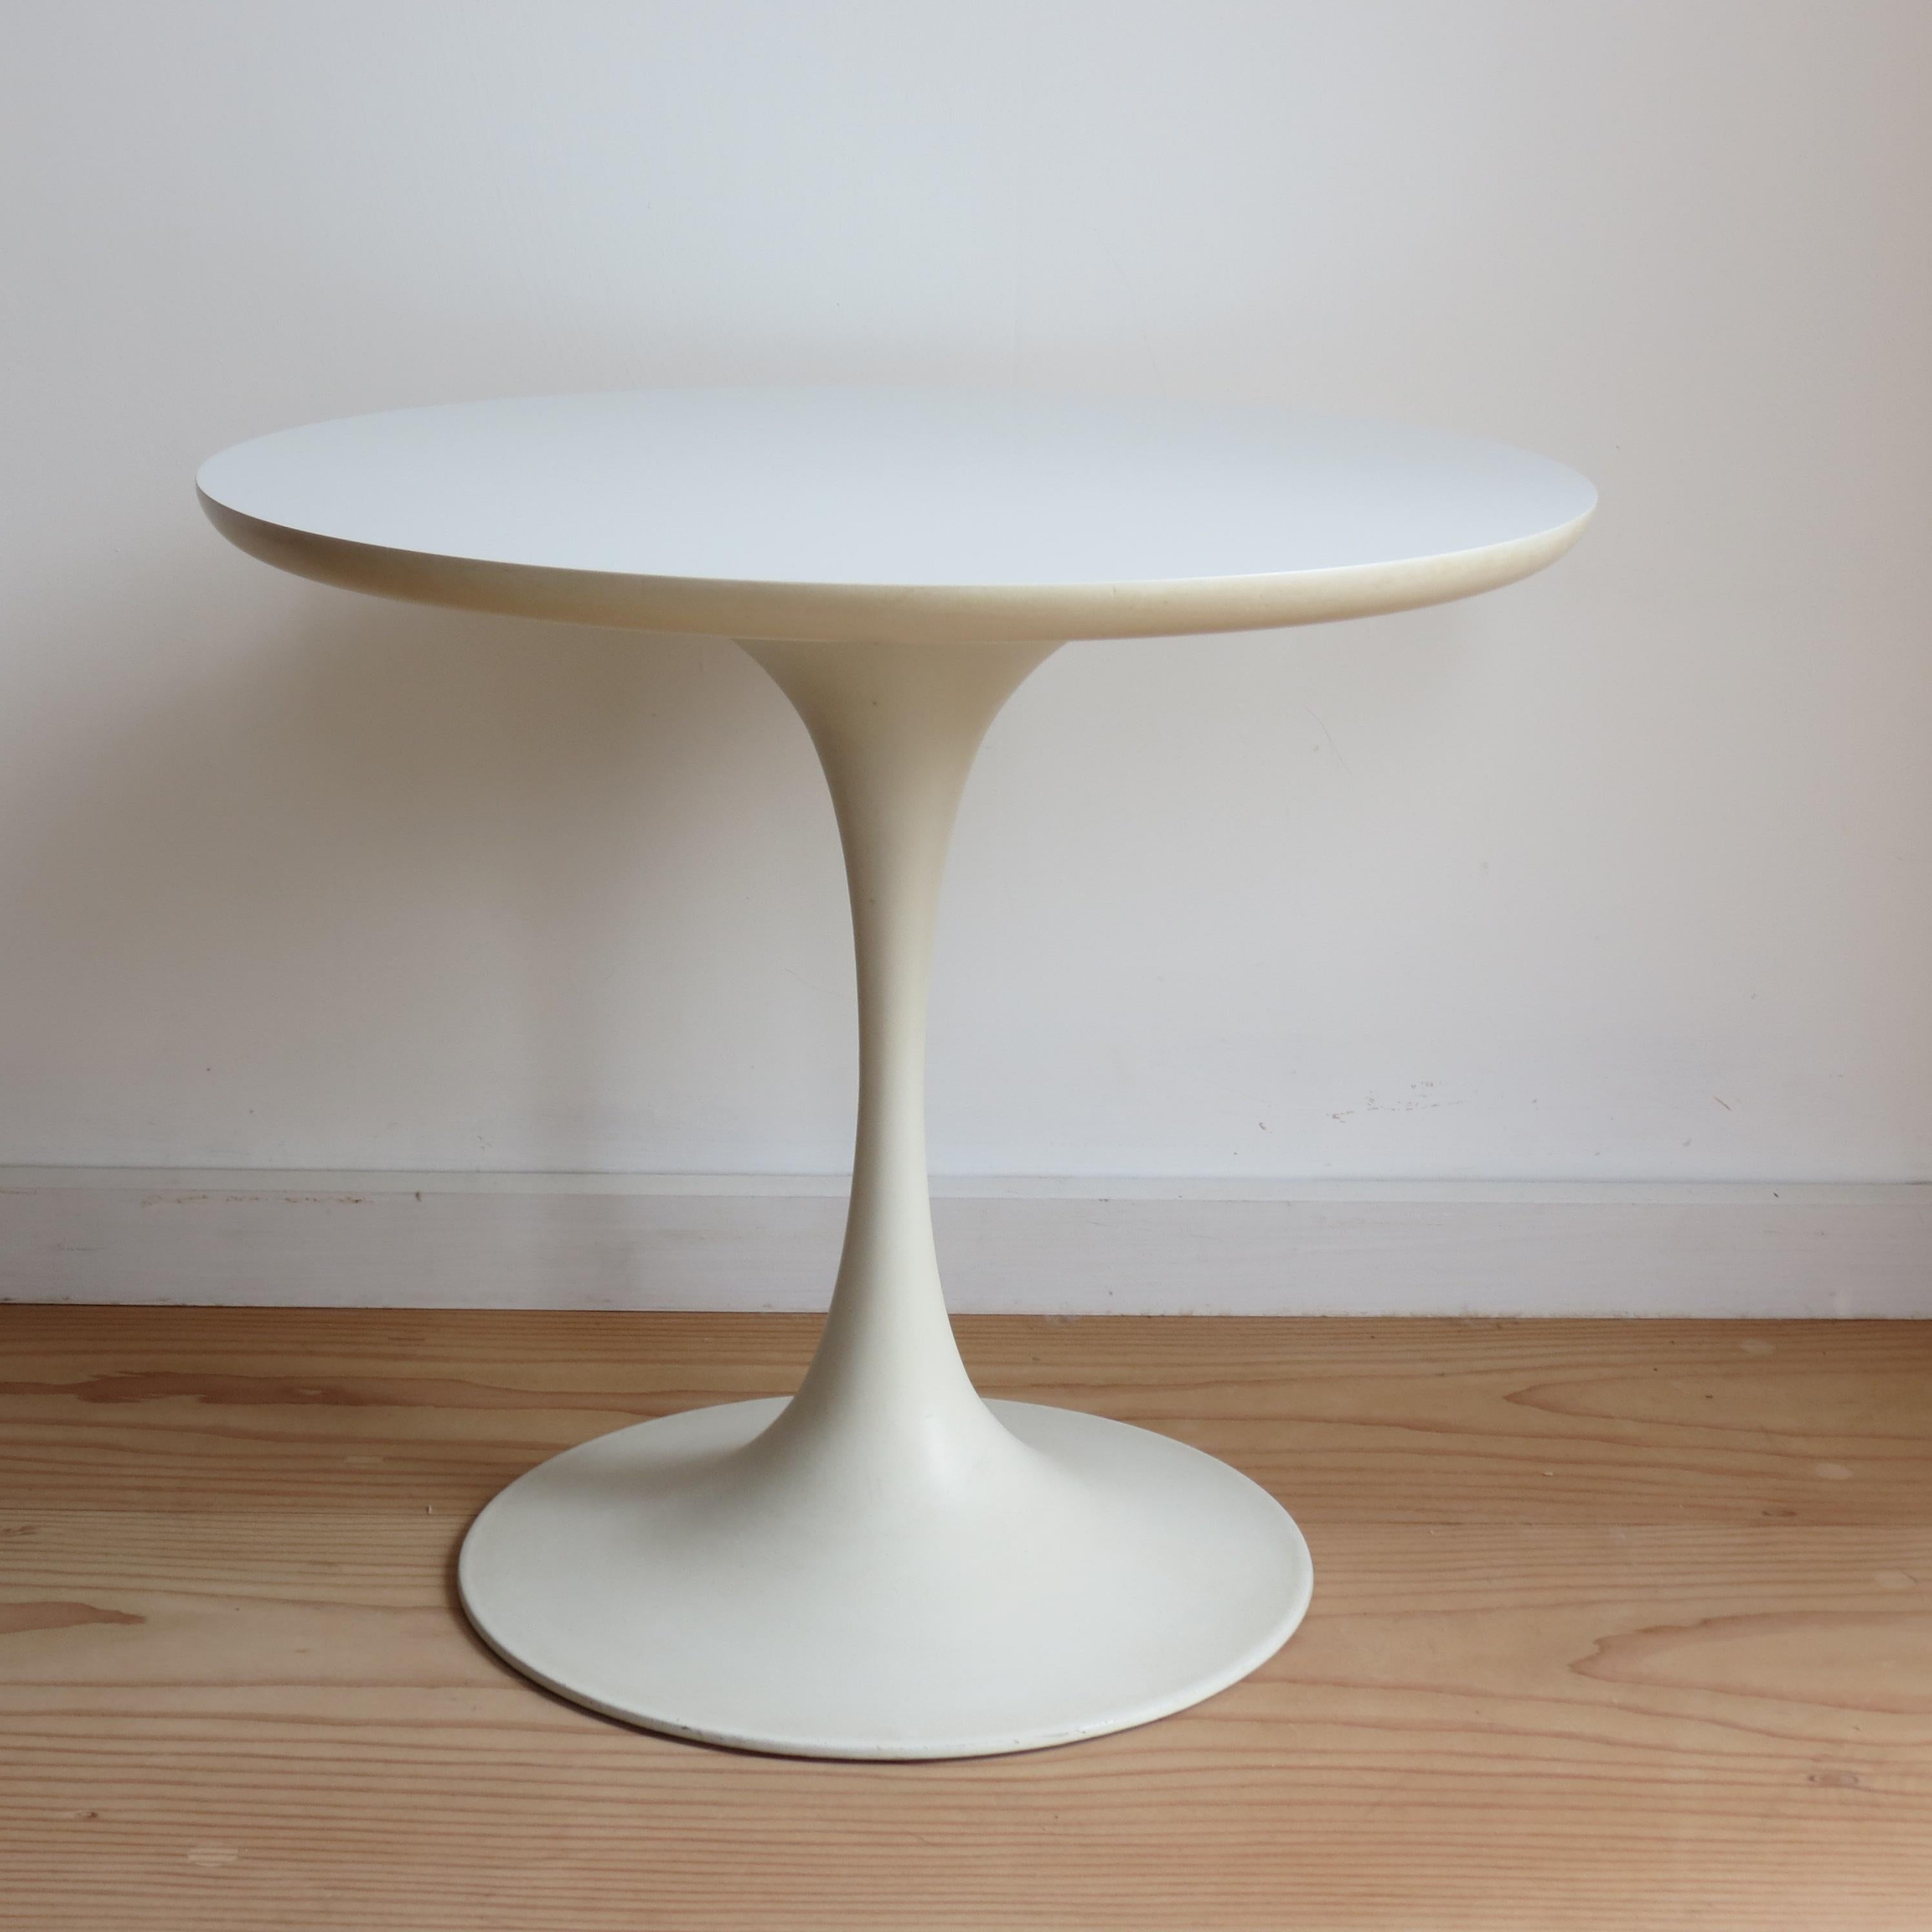 English 1960s White Tulip Side Table Designed by Maurice Burke for Arkana, Bath, UK